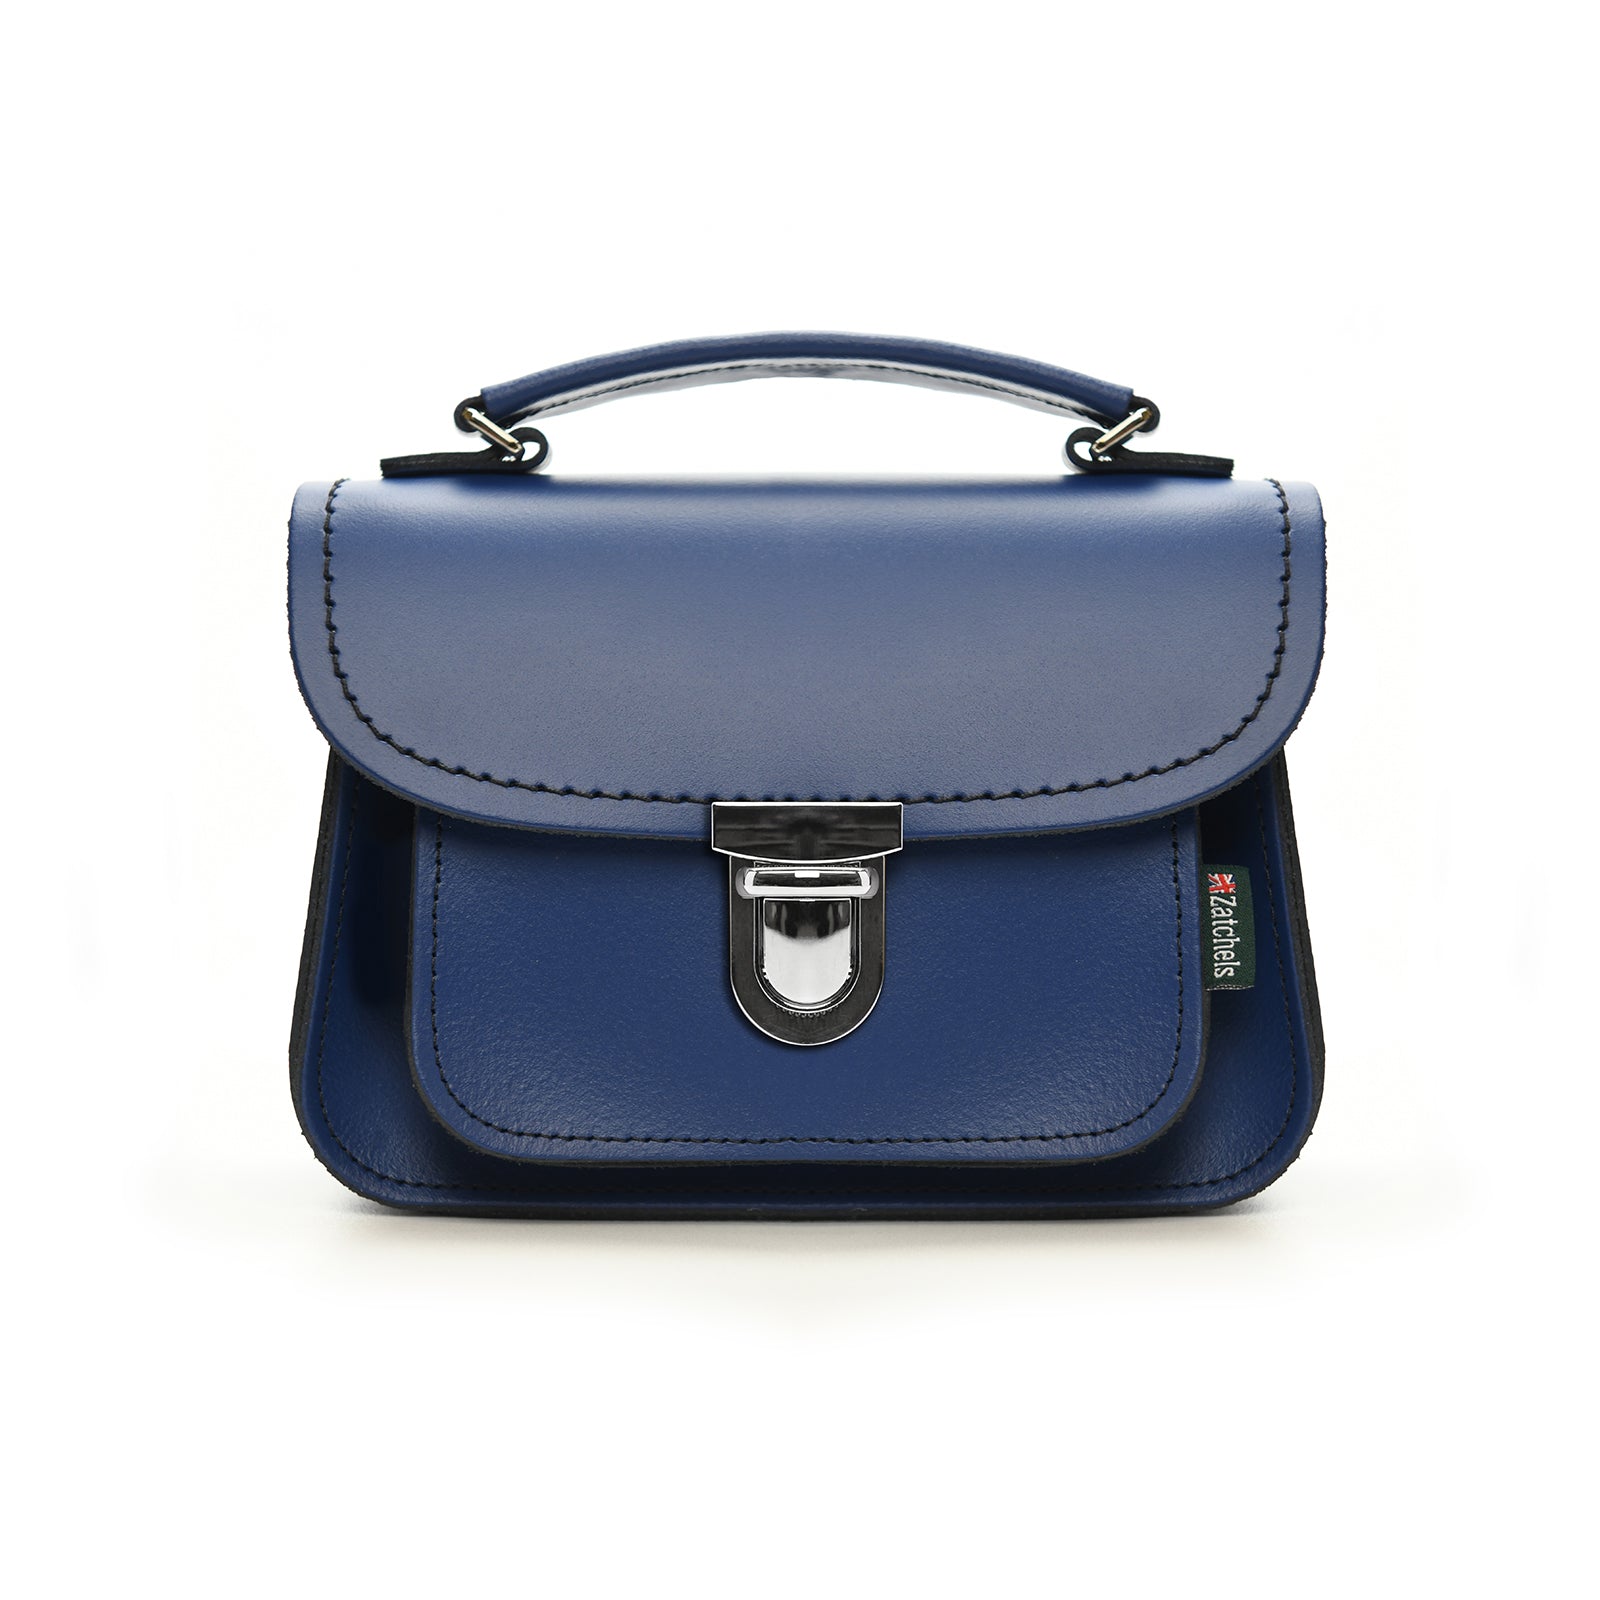 Zatchels Luna Handmade Leather Handbag - Royal Blue